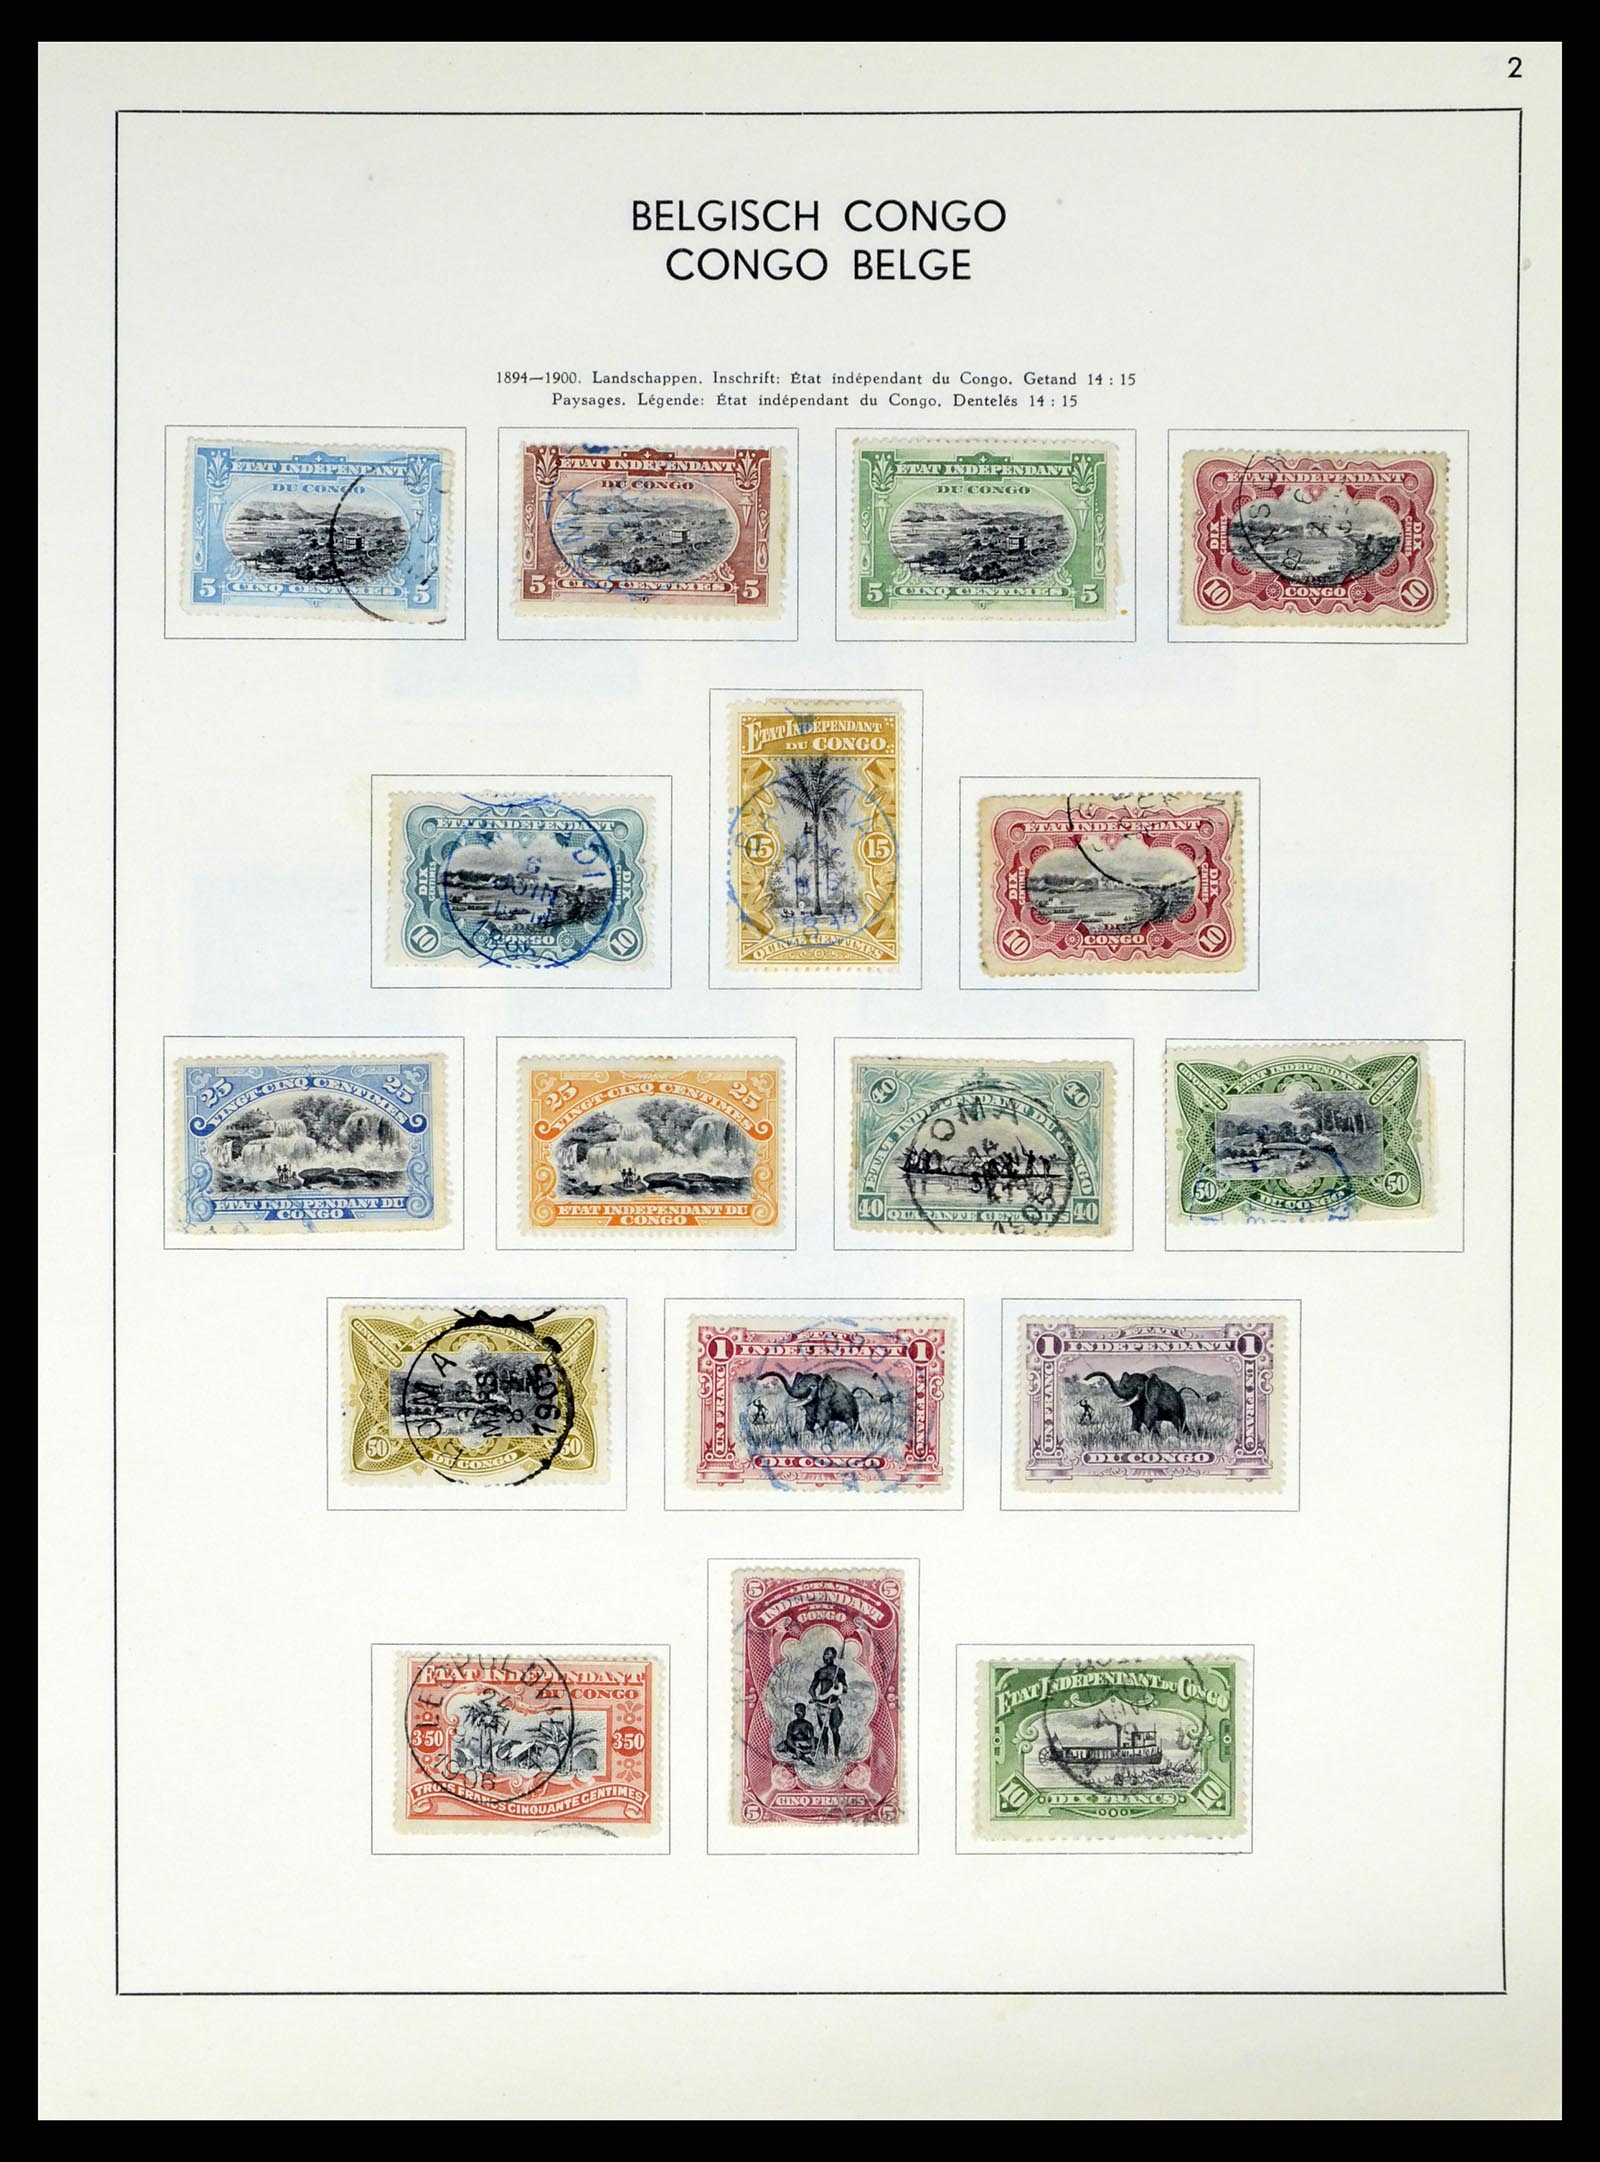 37959 157 - Stamp Collection 37959 Belgium and Belgian Congo 1849-1960.